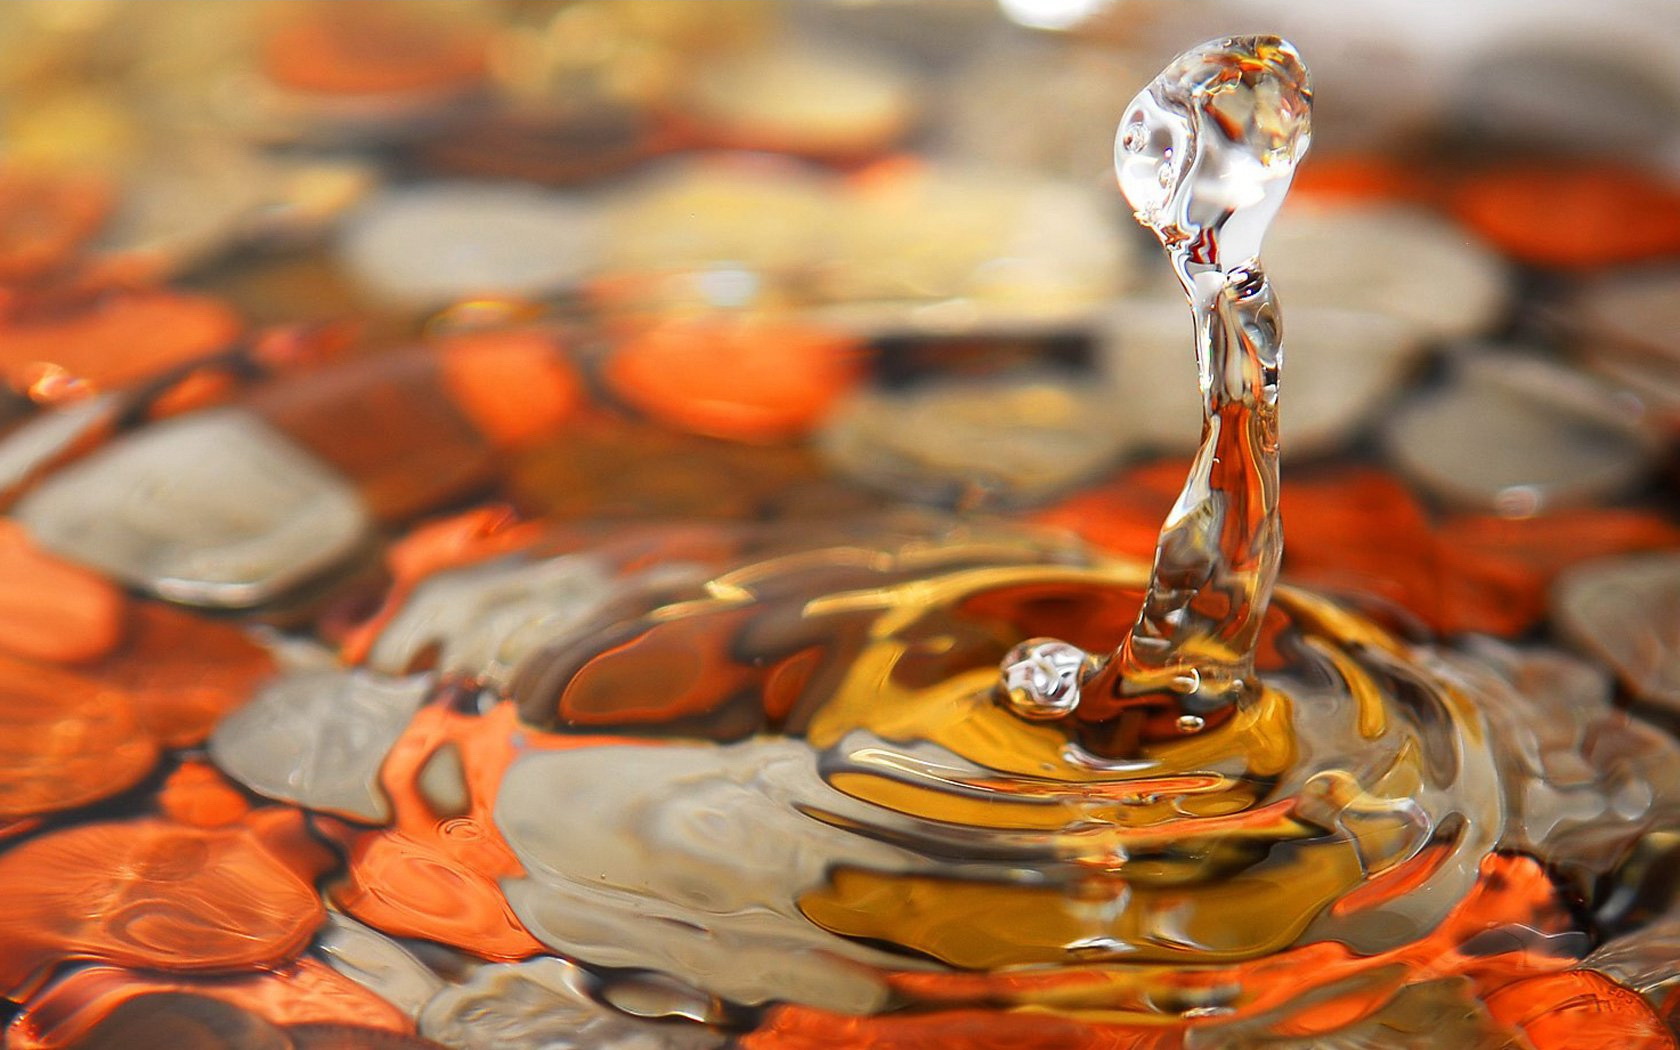 best water wallpaper,orange,amber,water,close up,glass